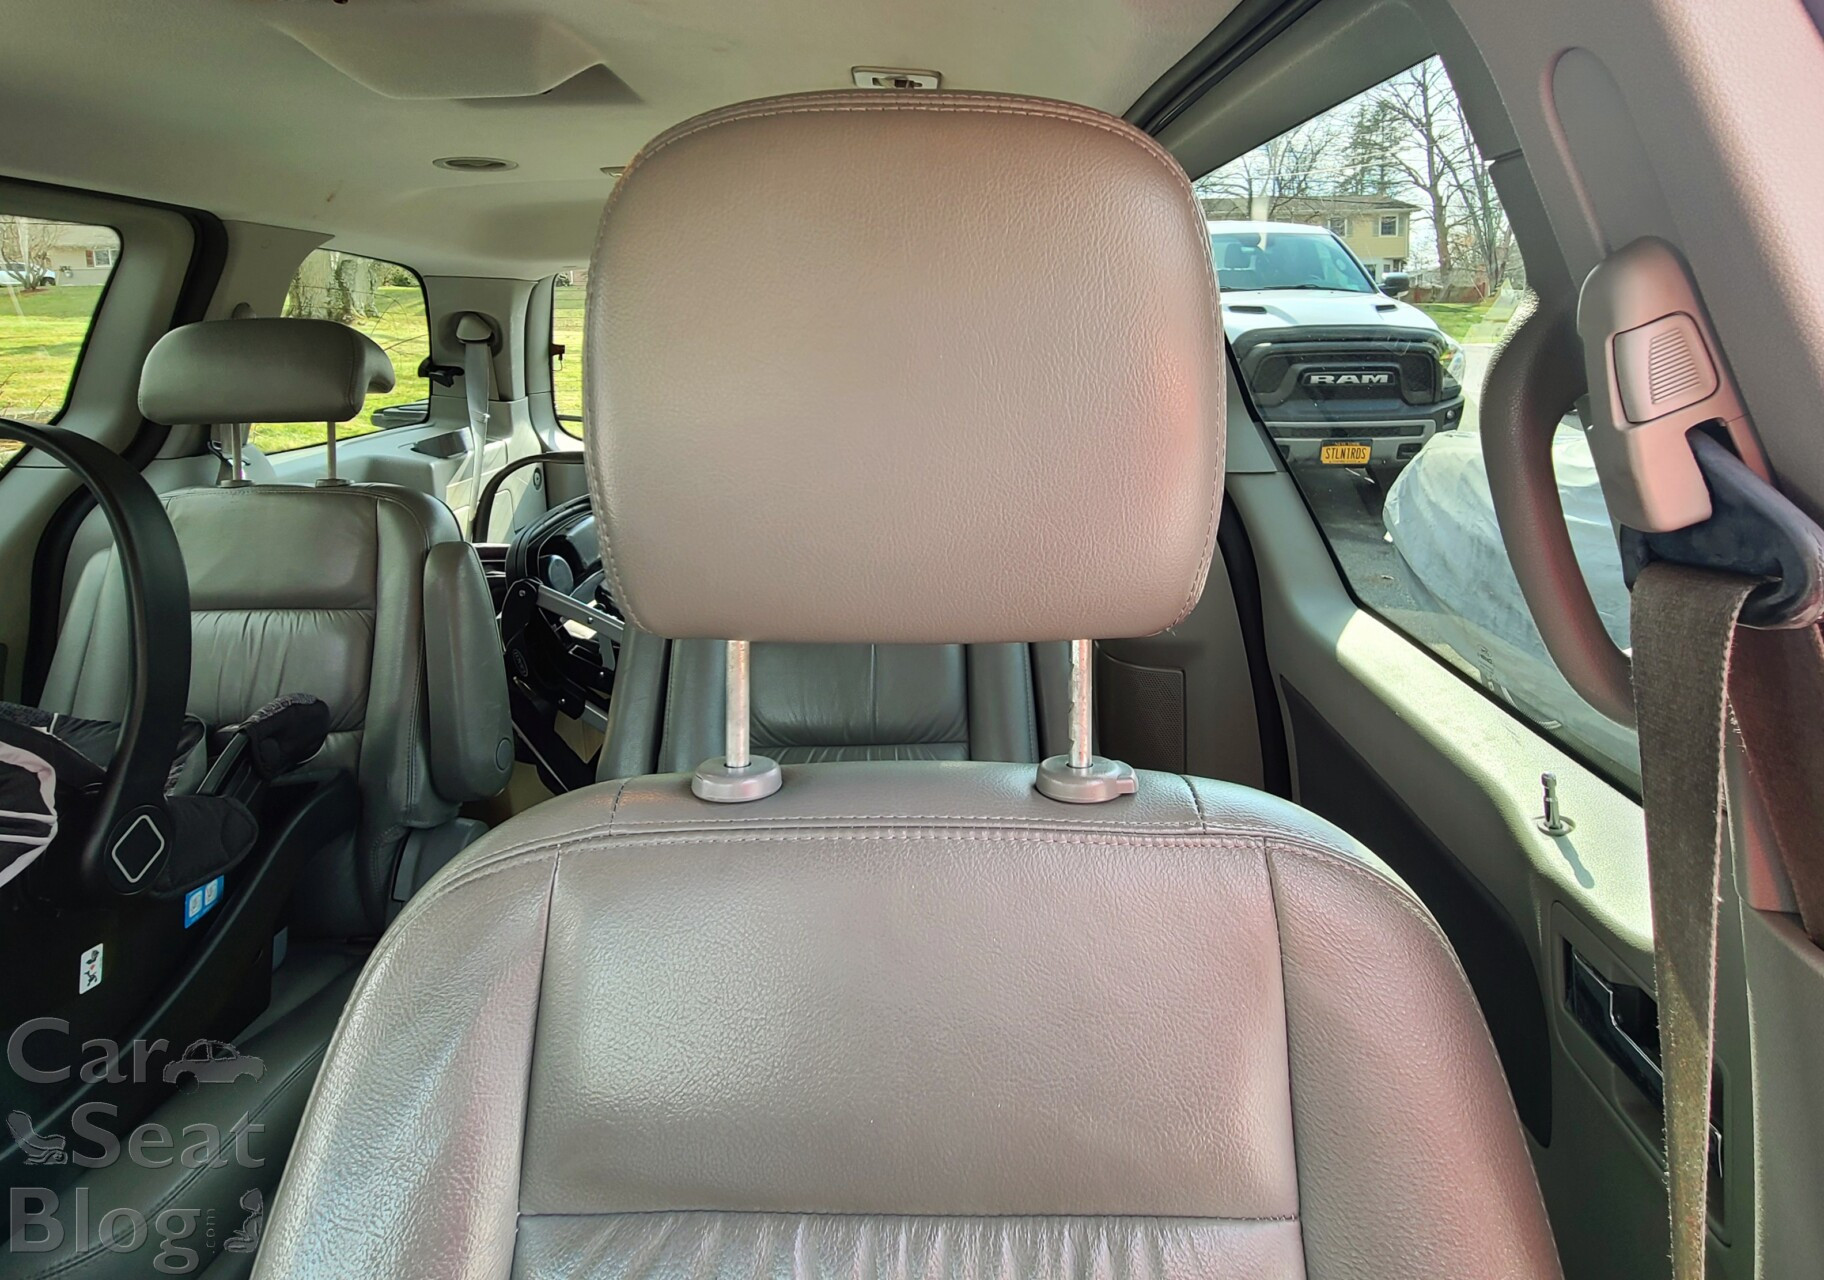 Mythbusting: Vehicle Headrests Are Meant to Break Vehicle Windows